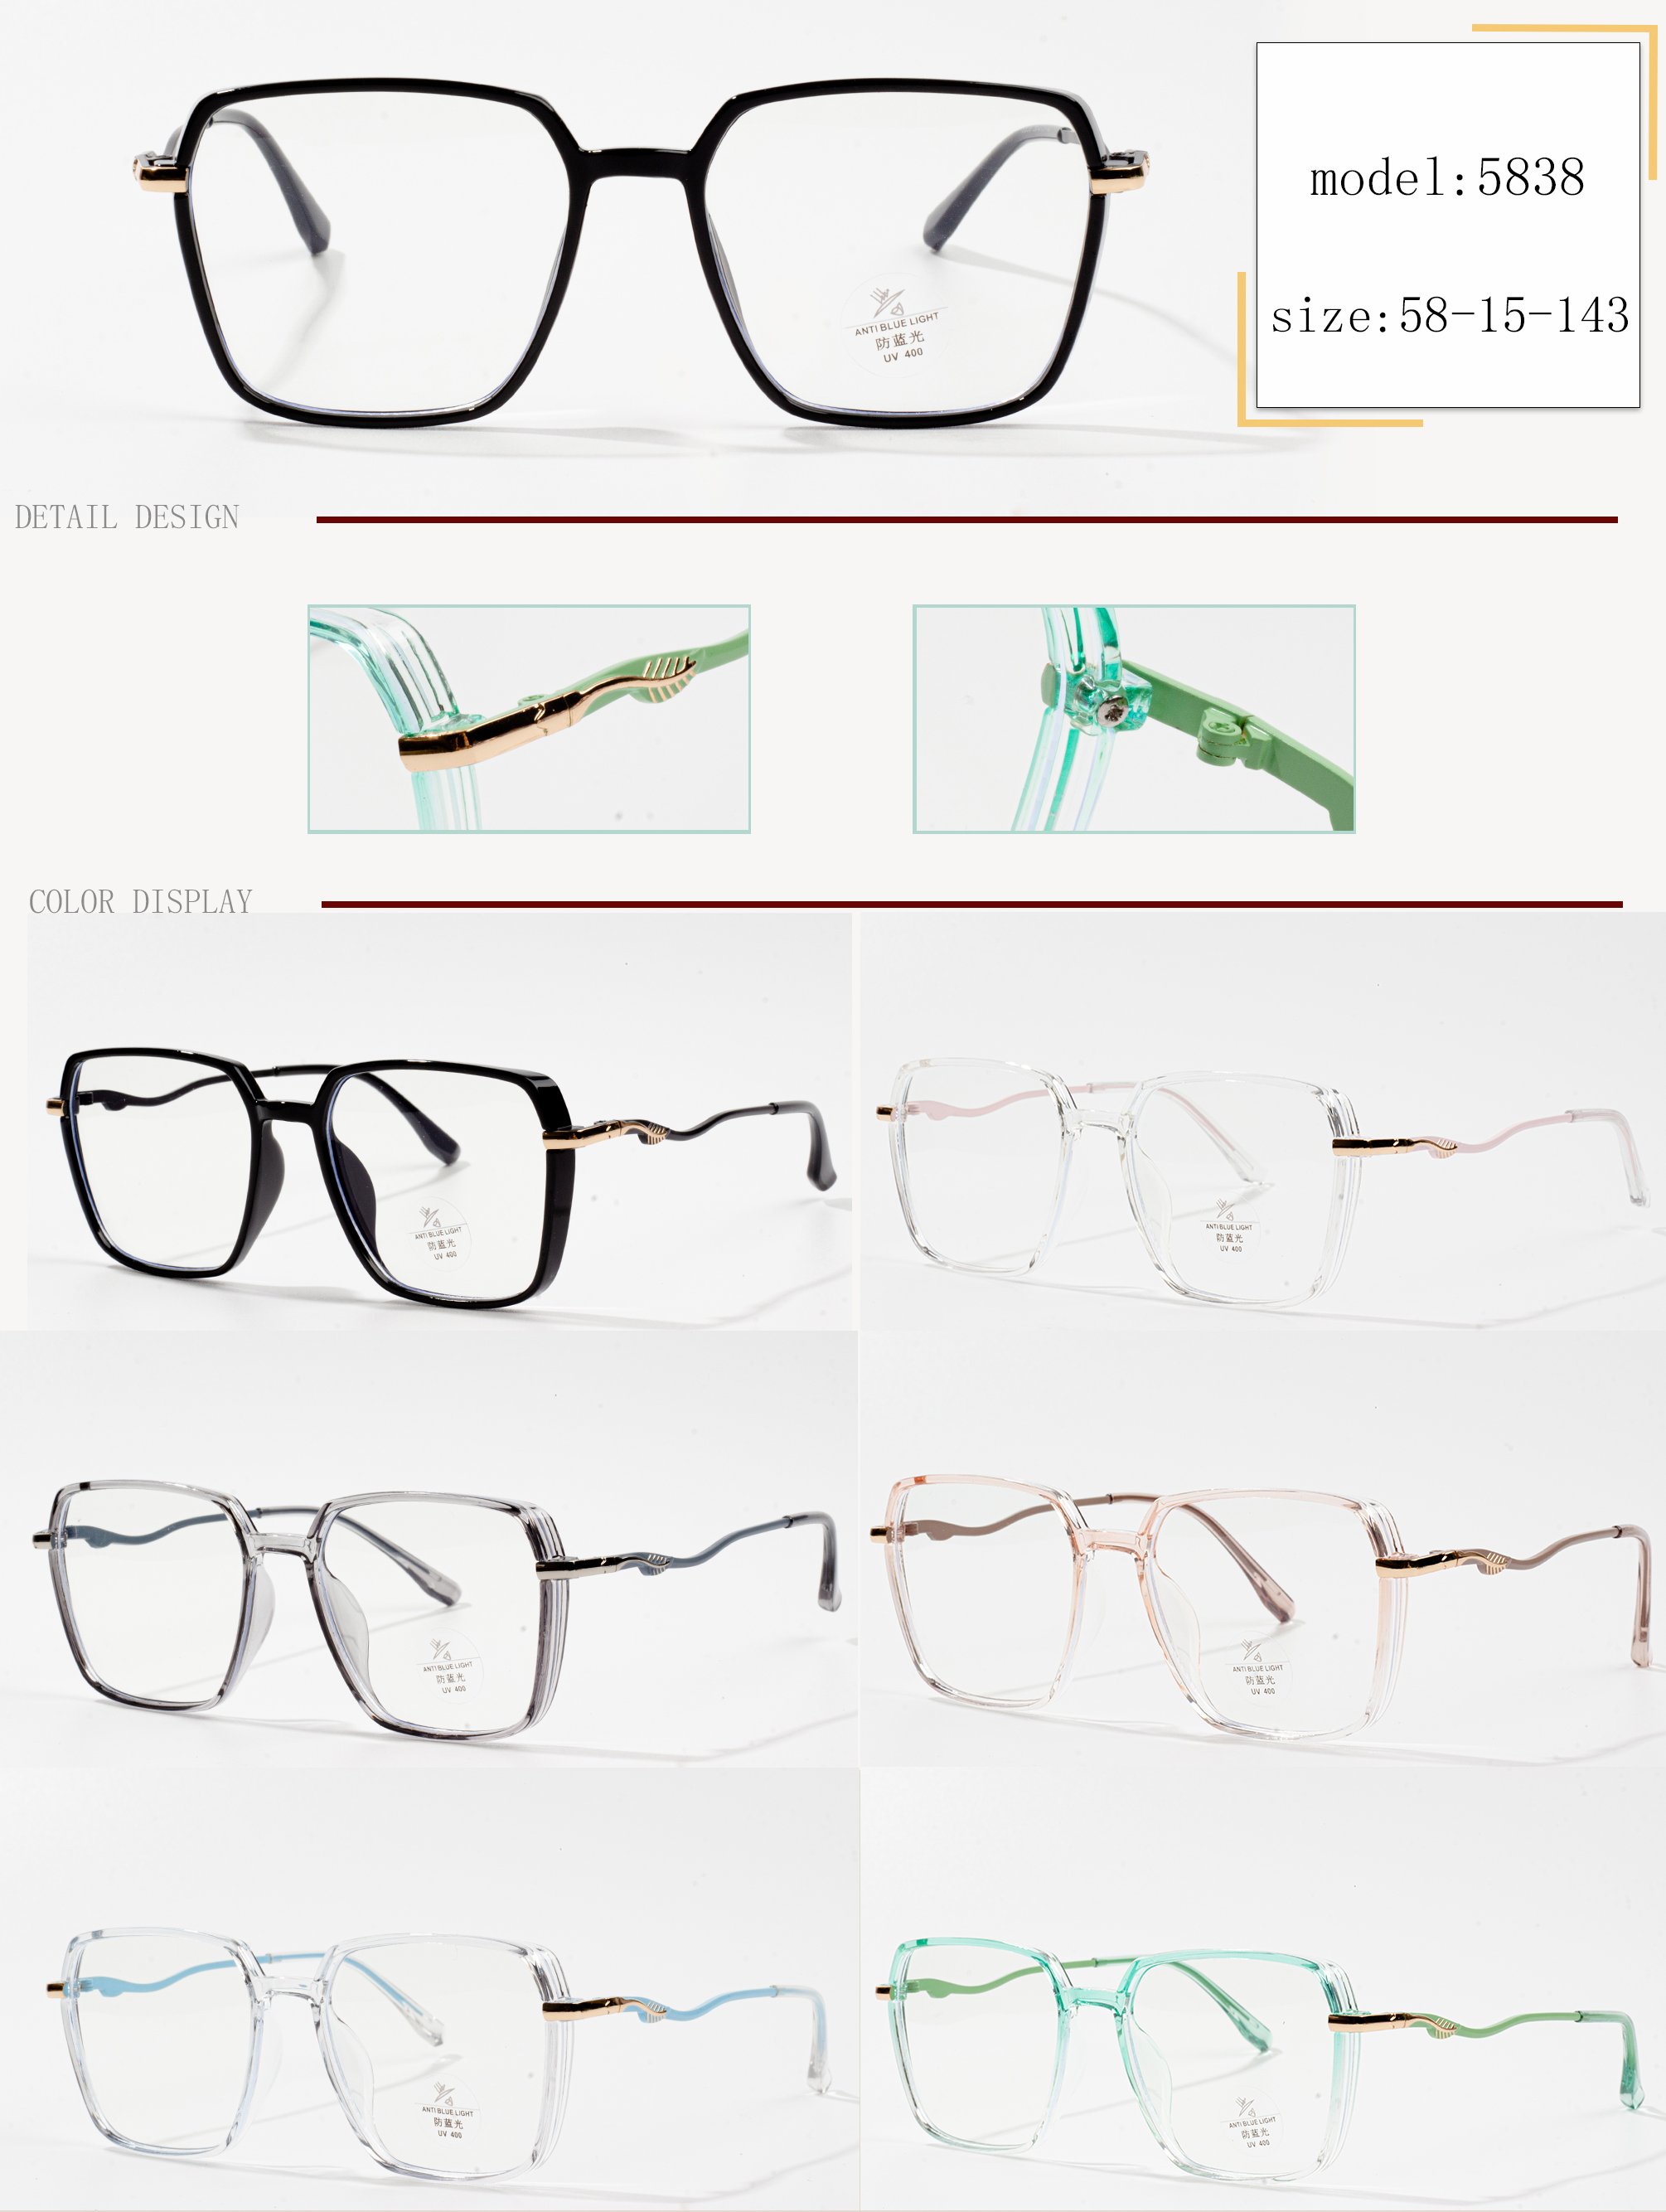 funky eyeglass frames